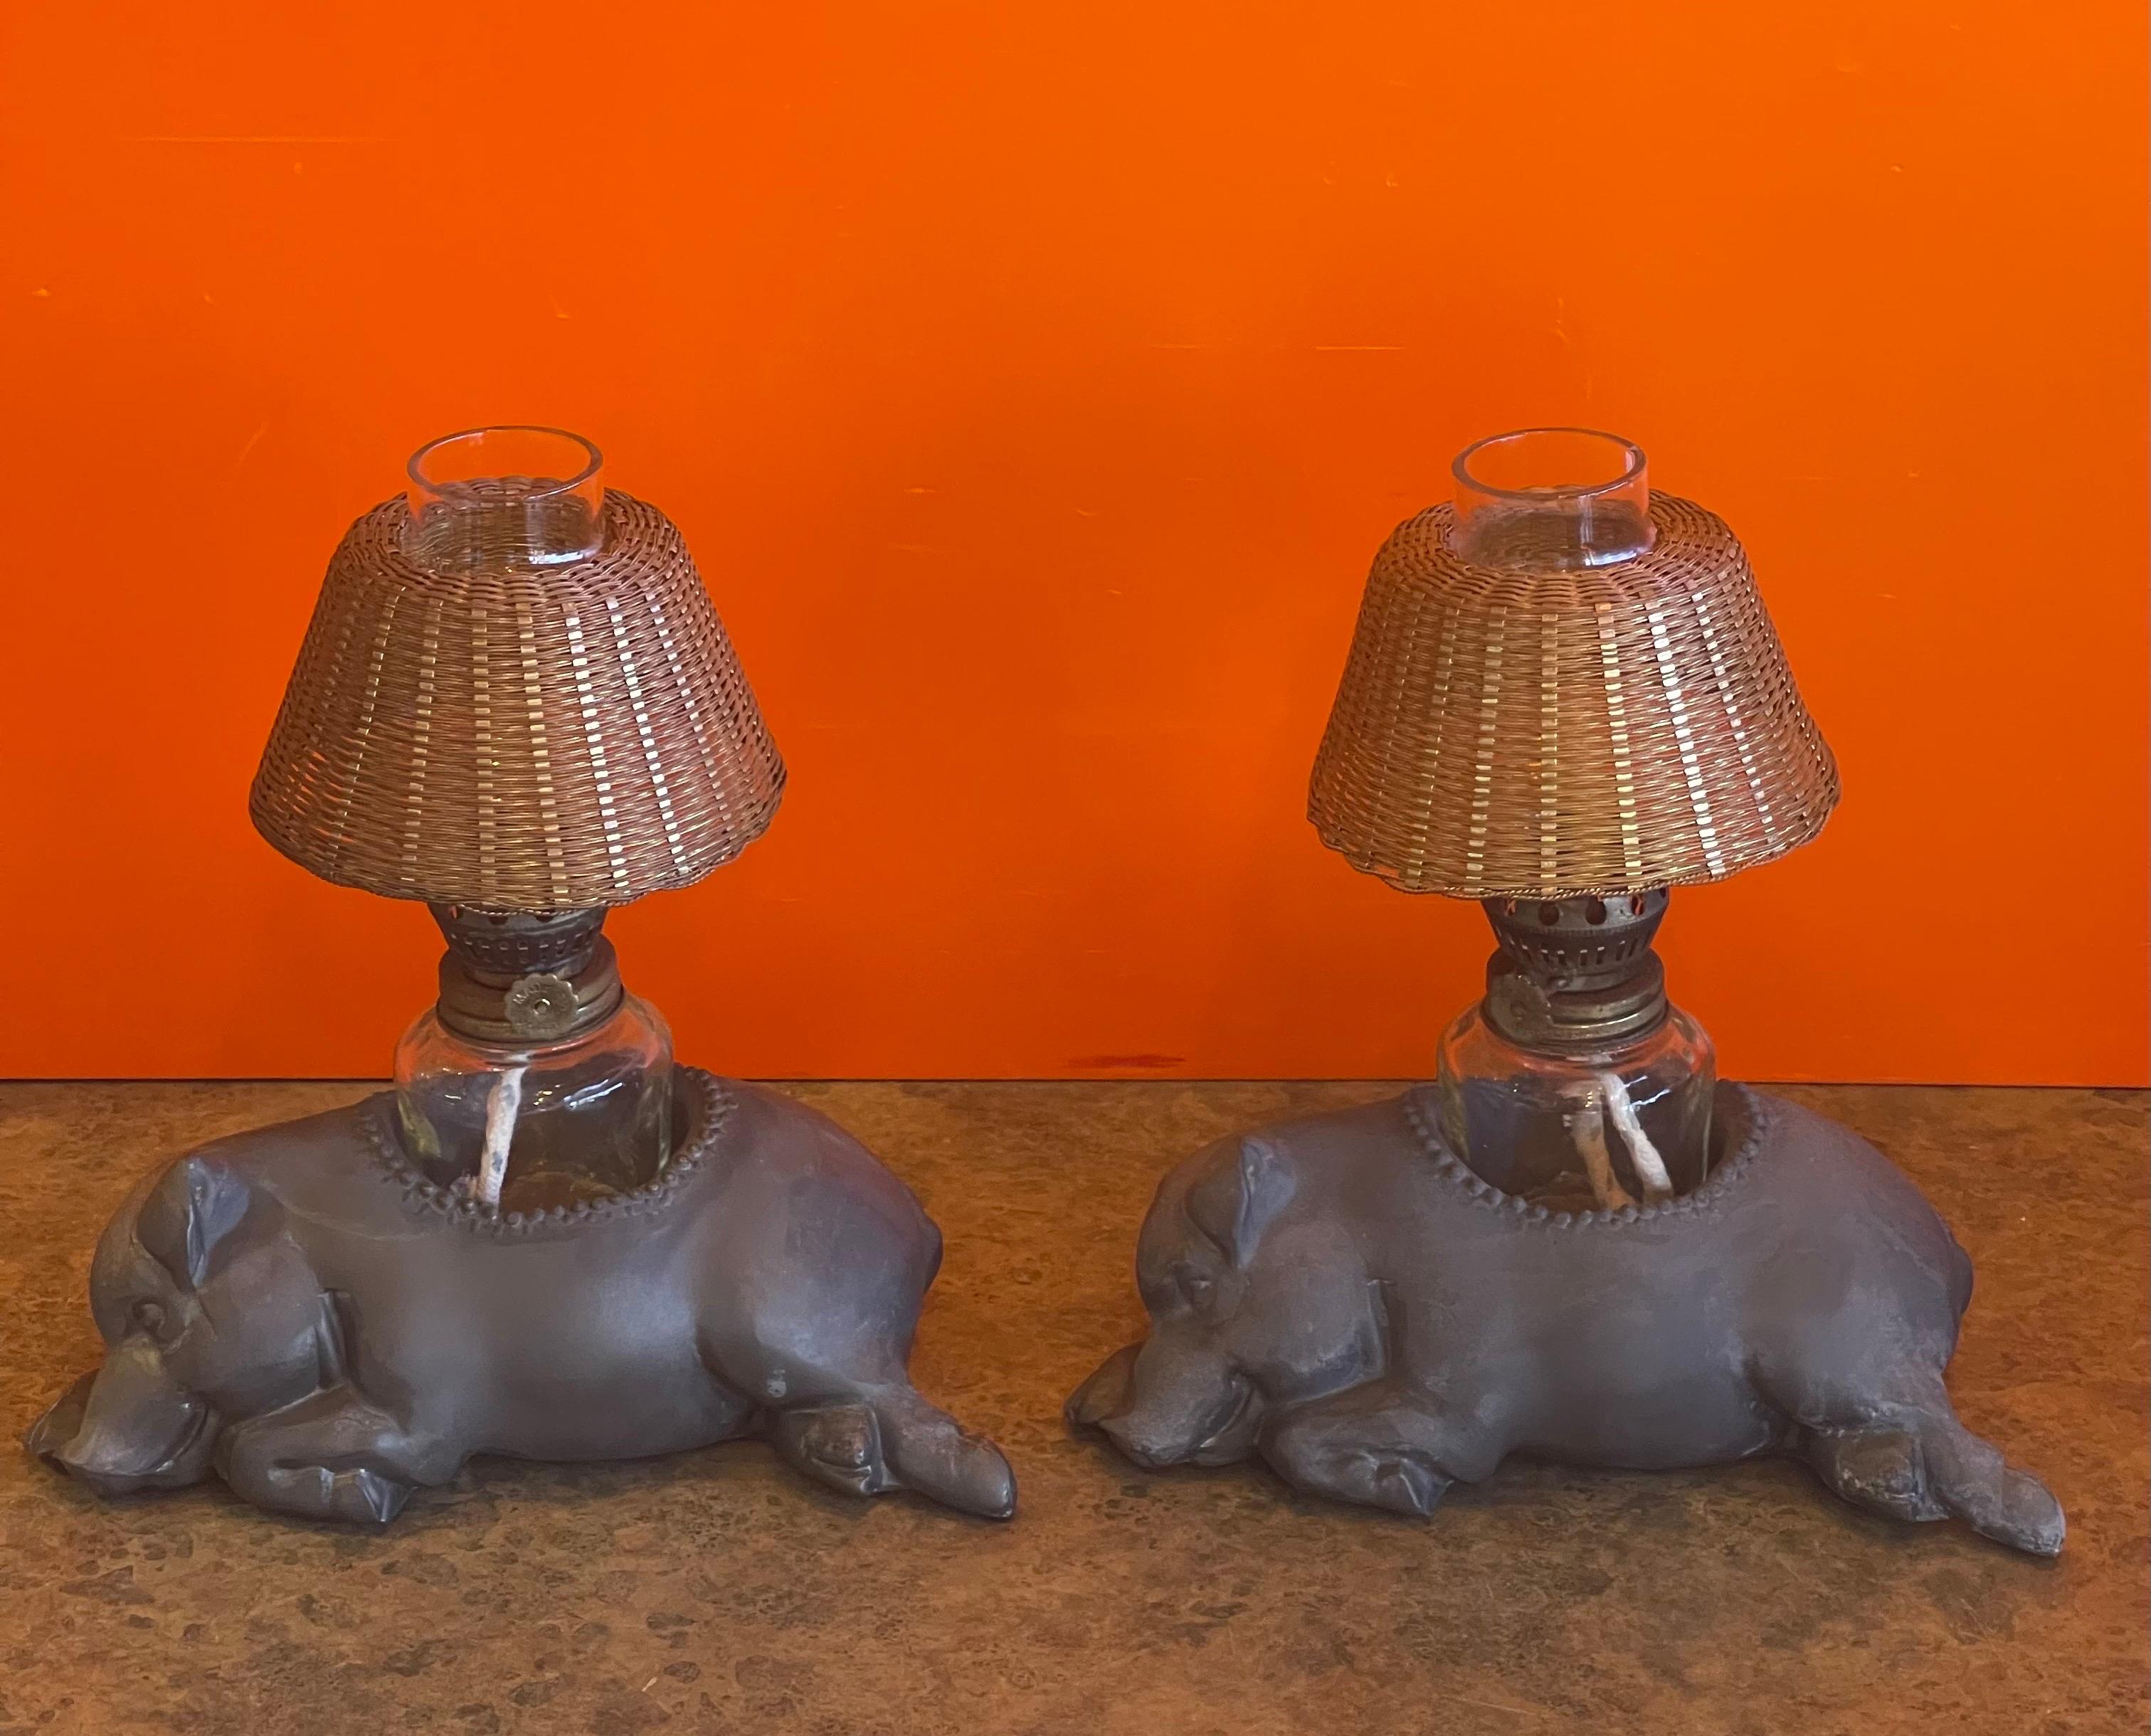 morton's pig lamp story